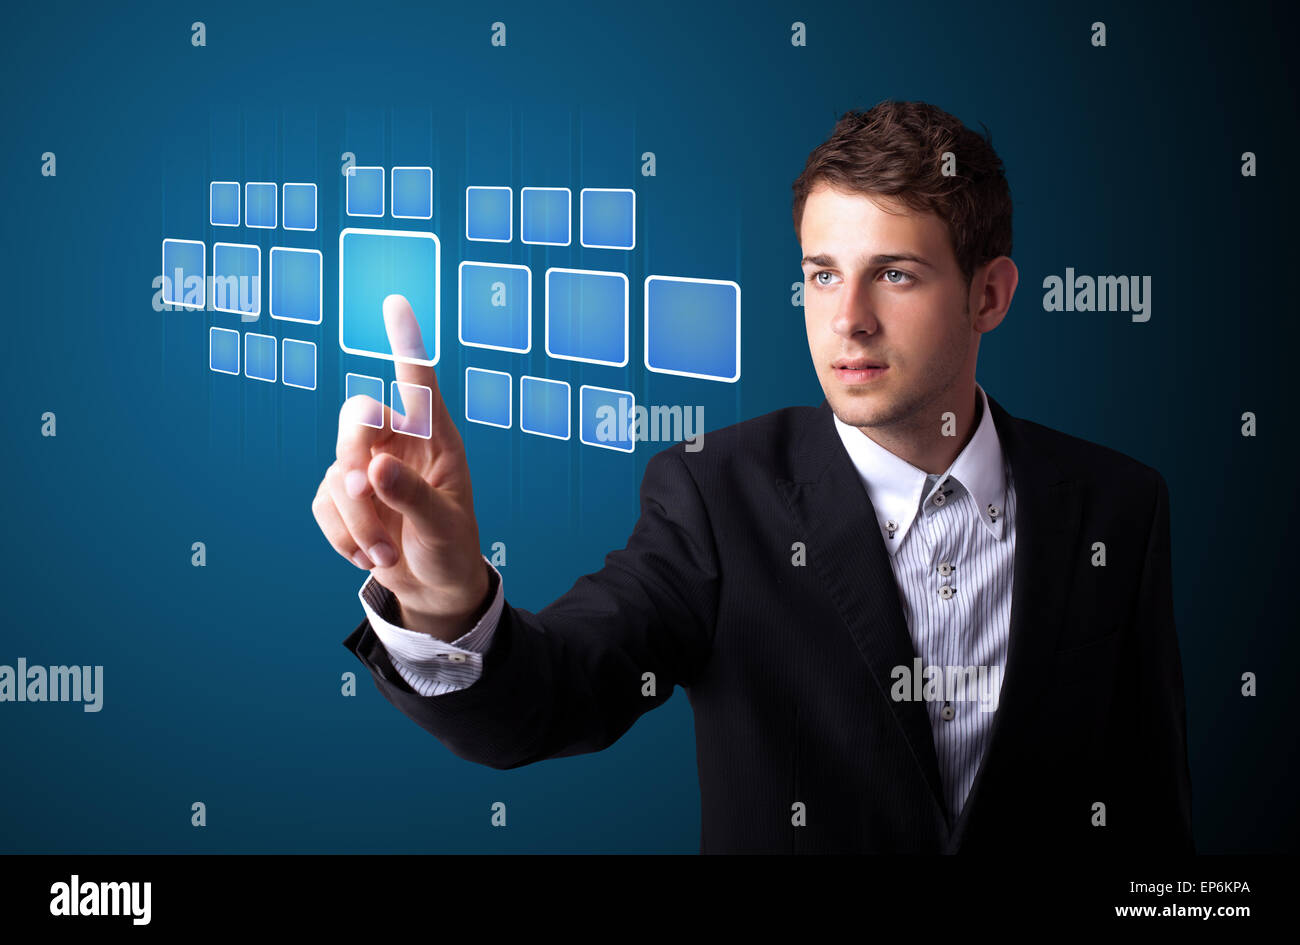 Businessman pressing high tech type of modern buttons Stock Photo